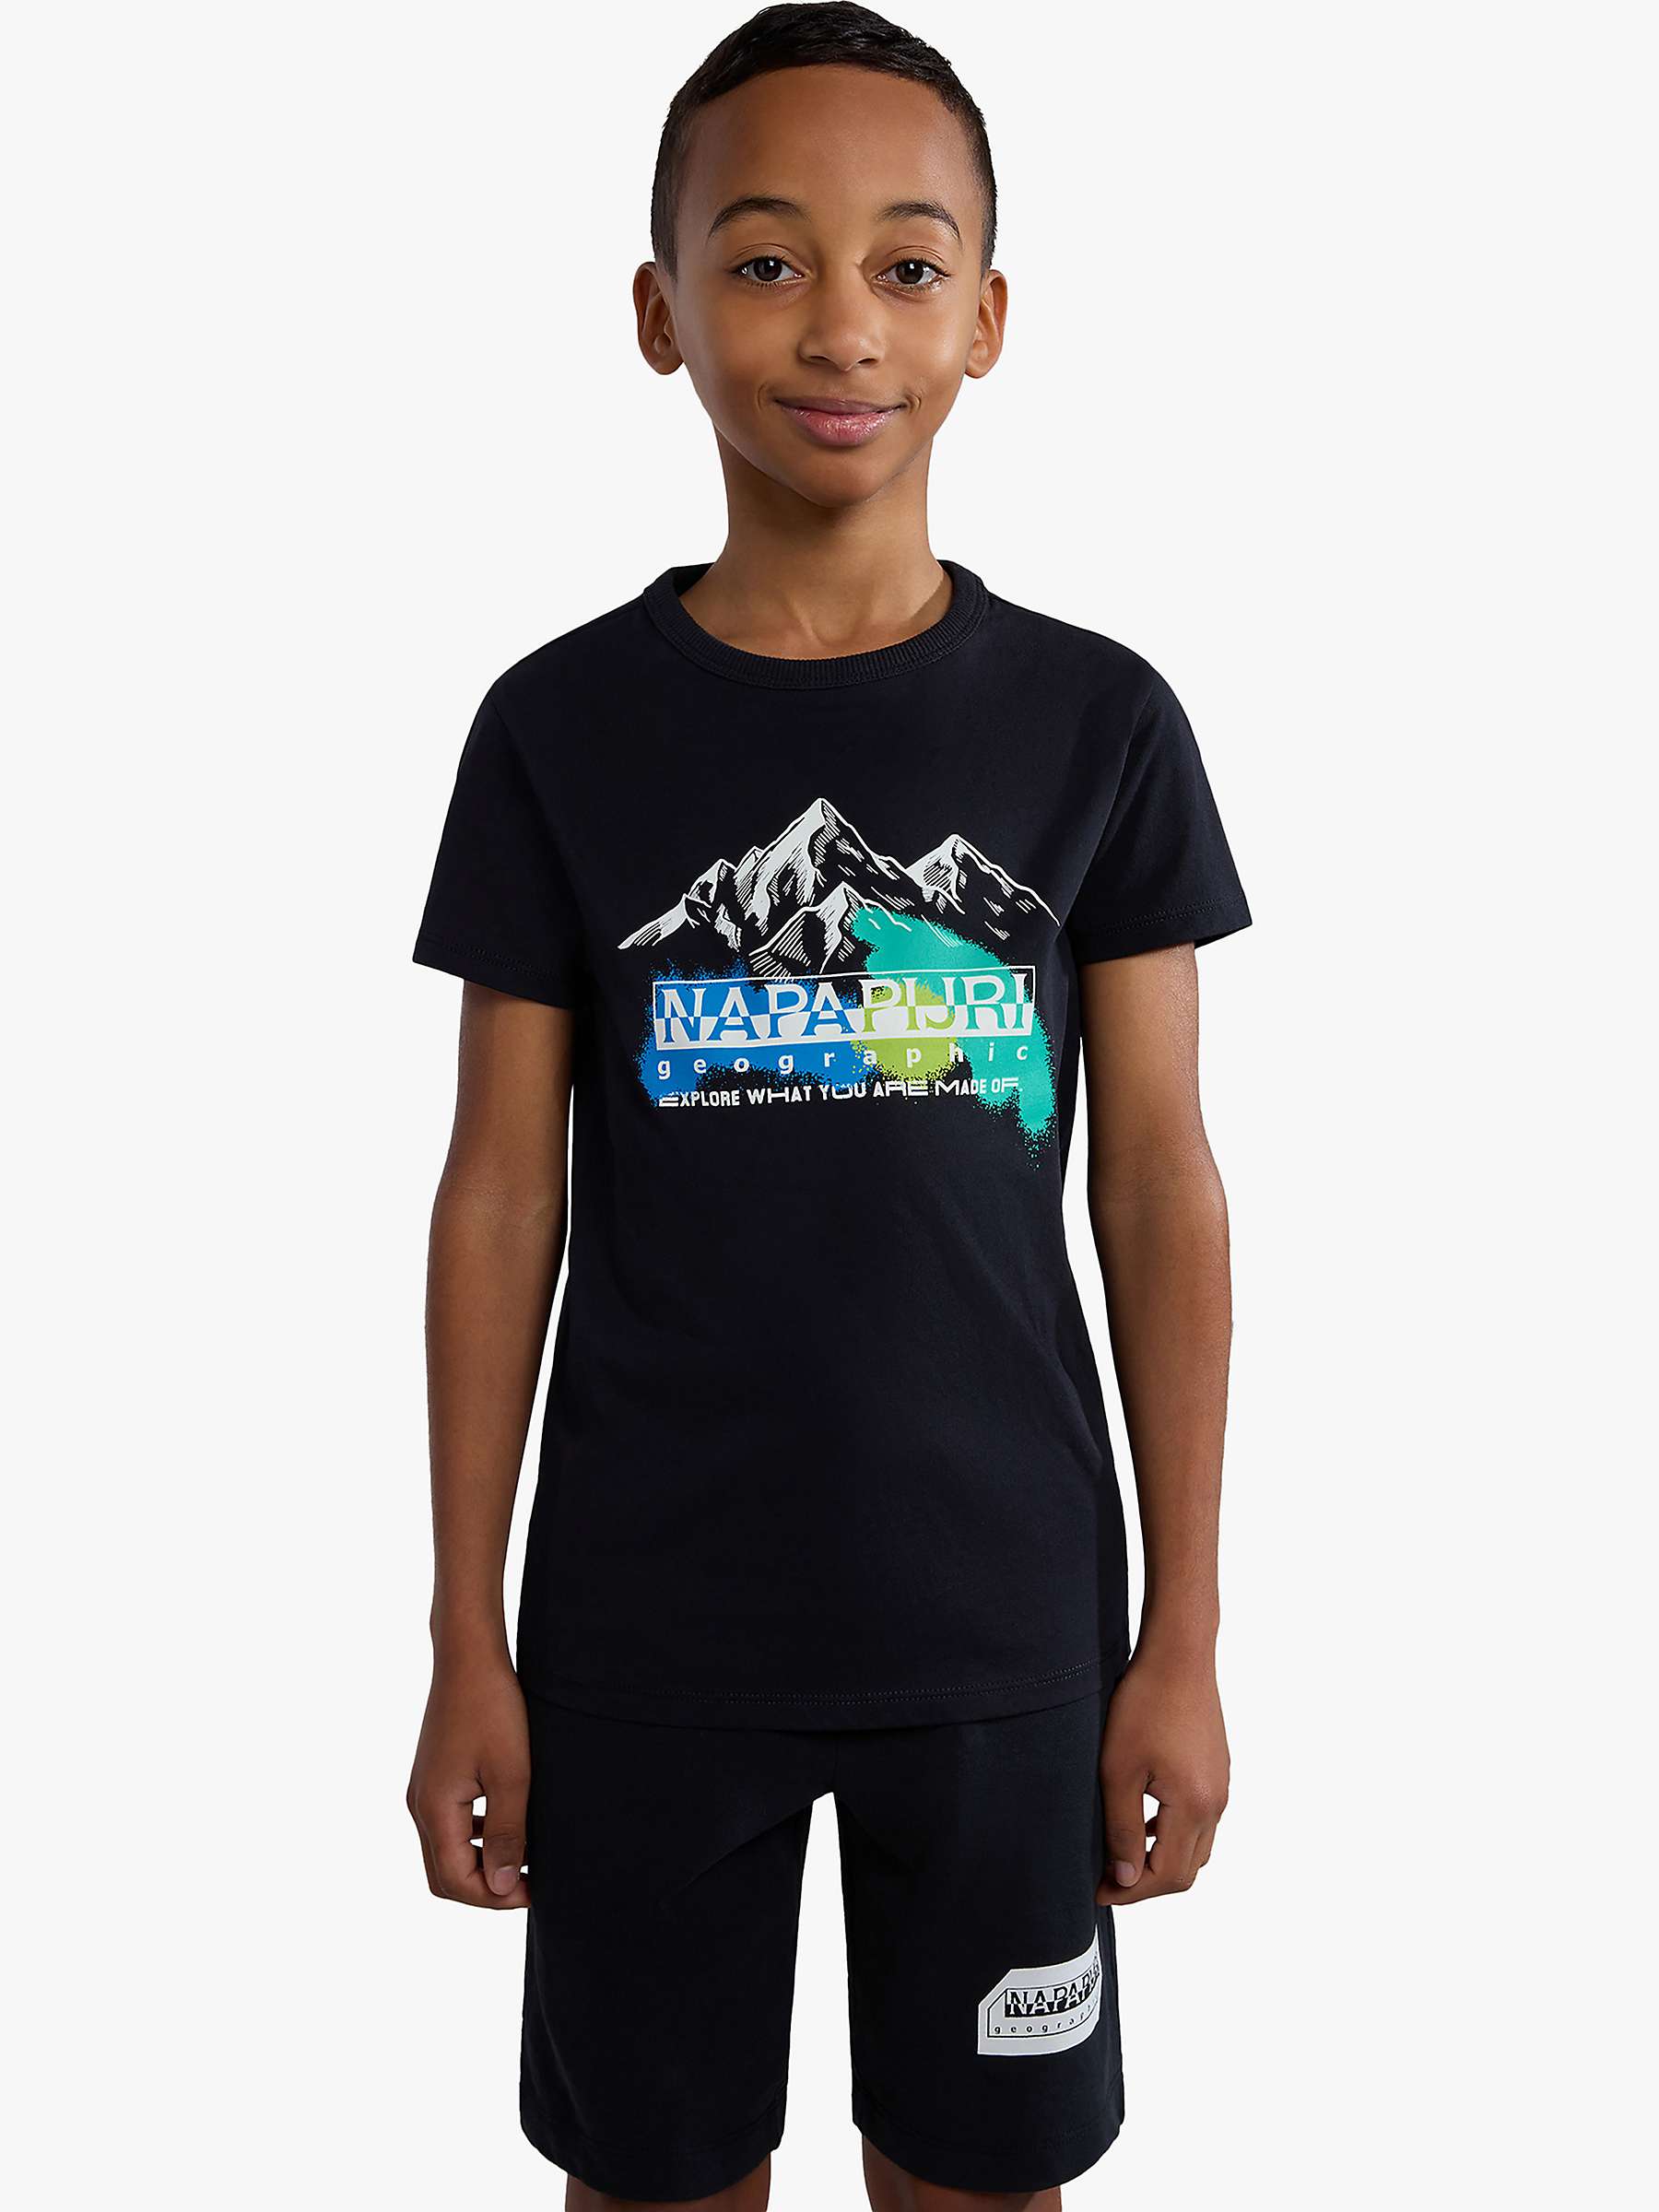 Buy Napapijri Kids' Liard Mountain Graphic T-Shirt, Black Online at johnlewis.com